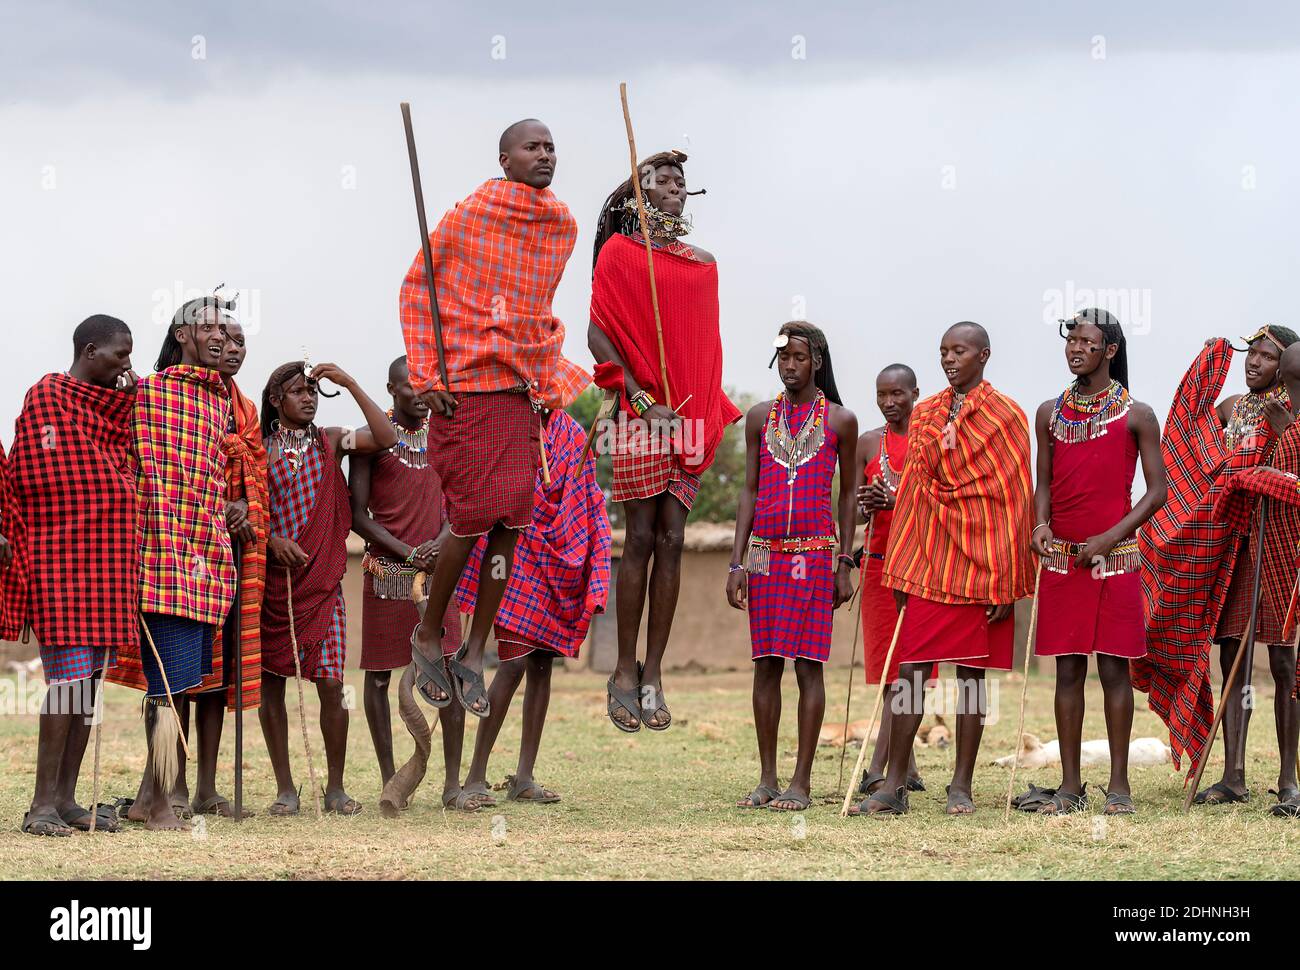 Maasai people preforming the traditional jumping dance in a Maasai village in Maasai Mara, Kenya. Stock Photo